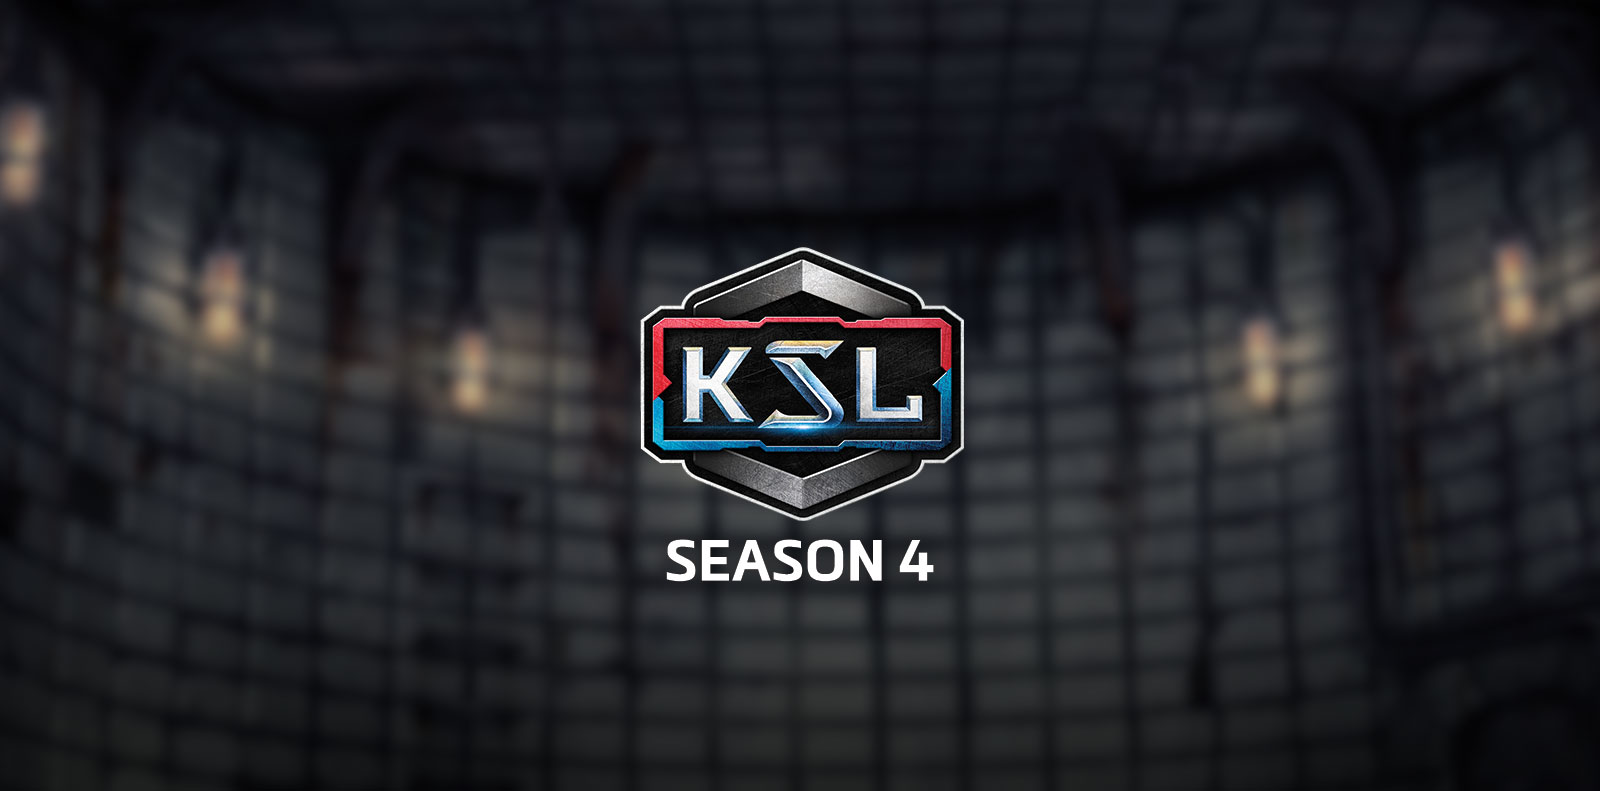 ¡Mira la 4ª Temporada de KSL en español!